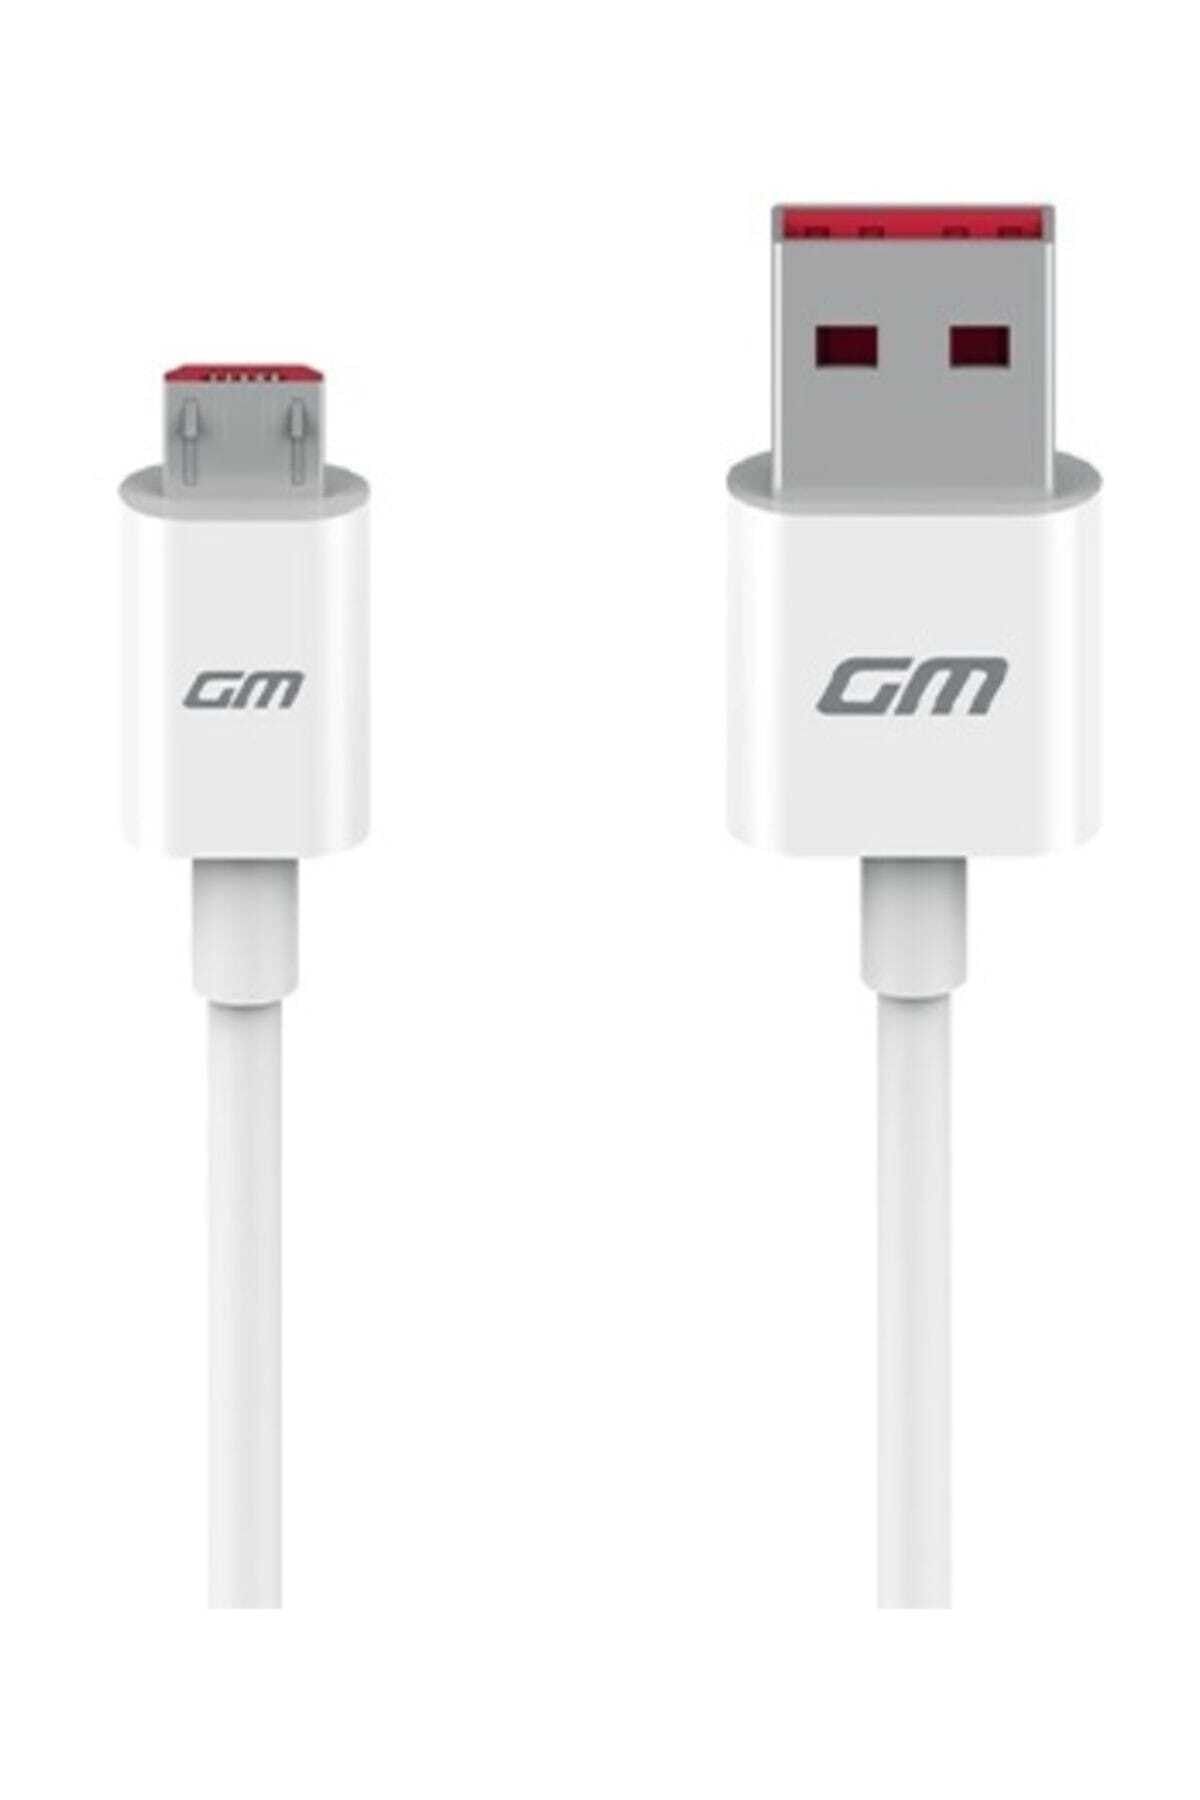 General Mobile GM 8 GO Micro USB Orijinal Şarj ve Data Kablo Beyaz (Telpa)